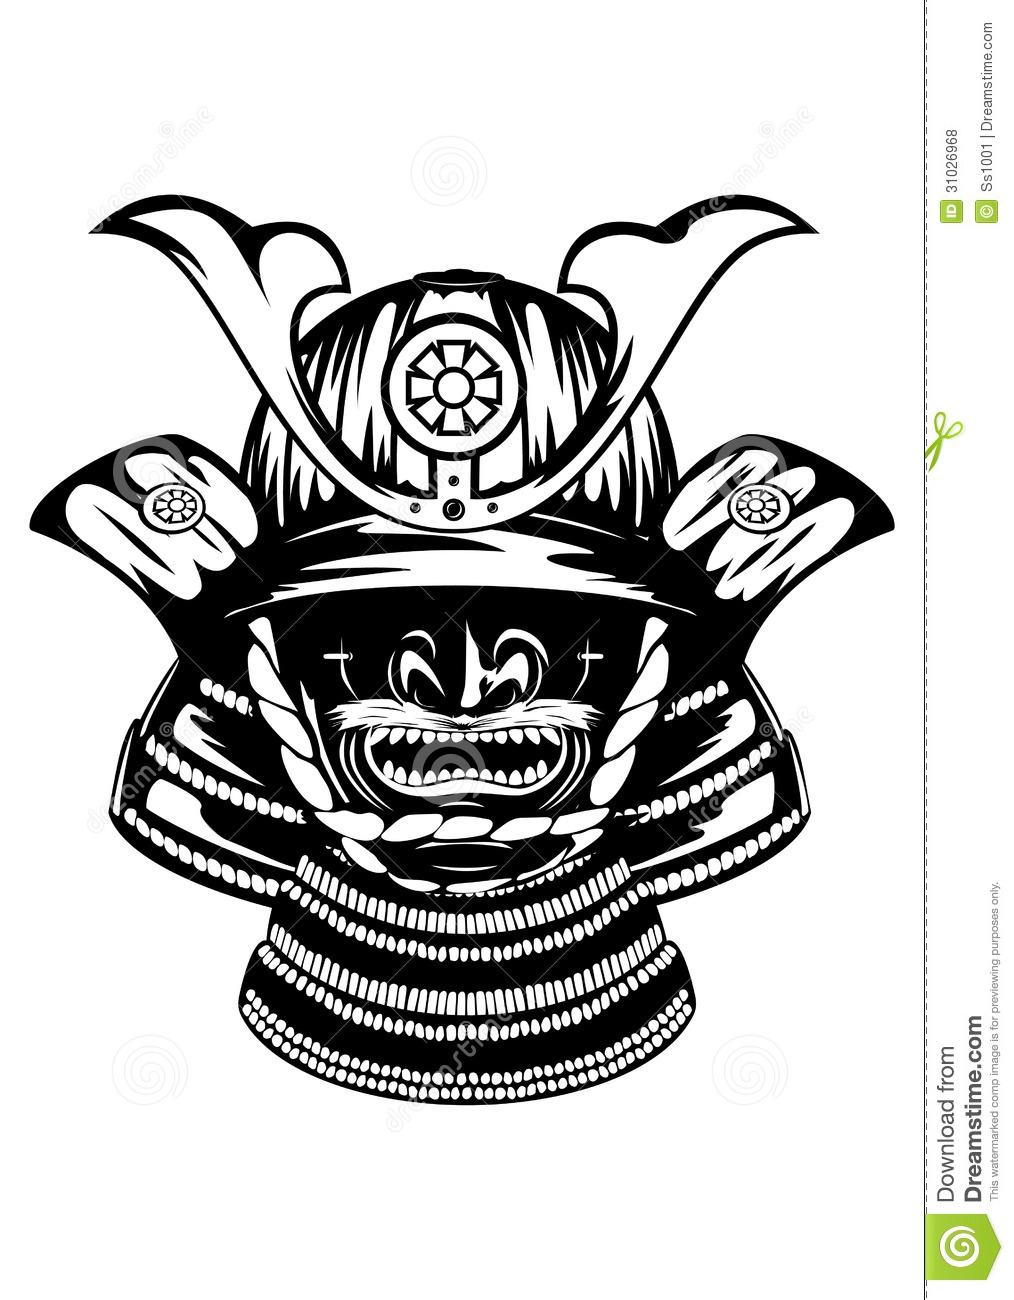 Samurai Helmet Menpo With Yodare Kake Royalty Free Stock Photos